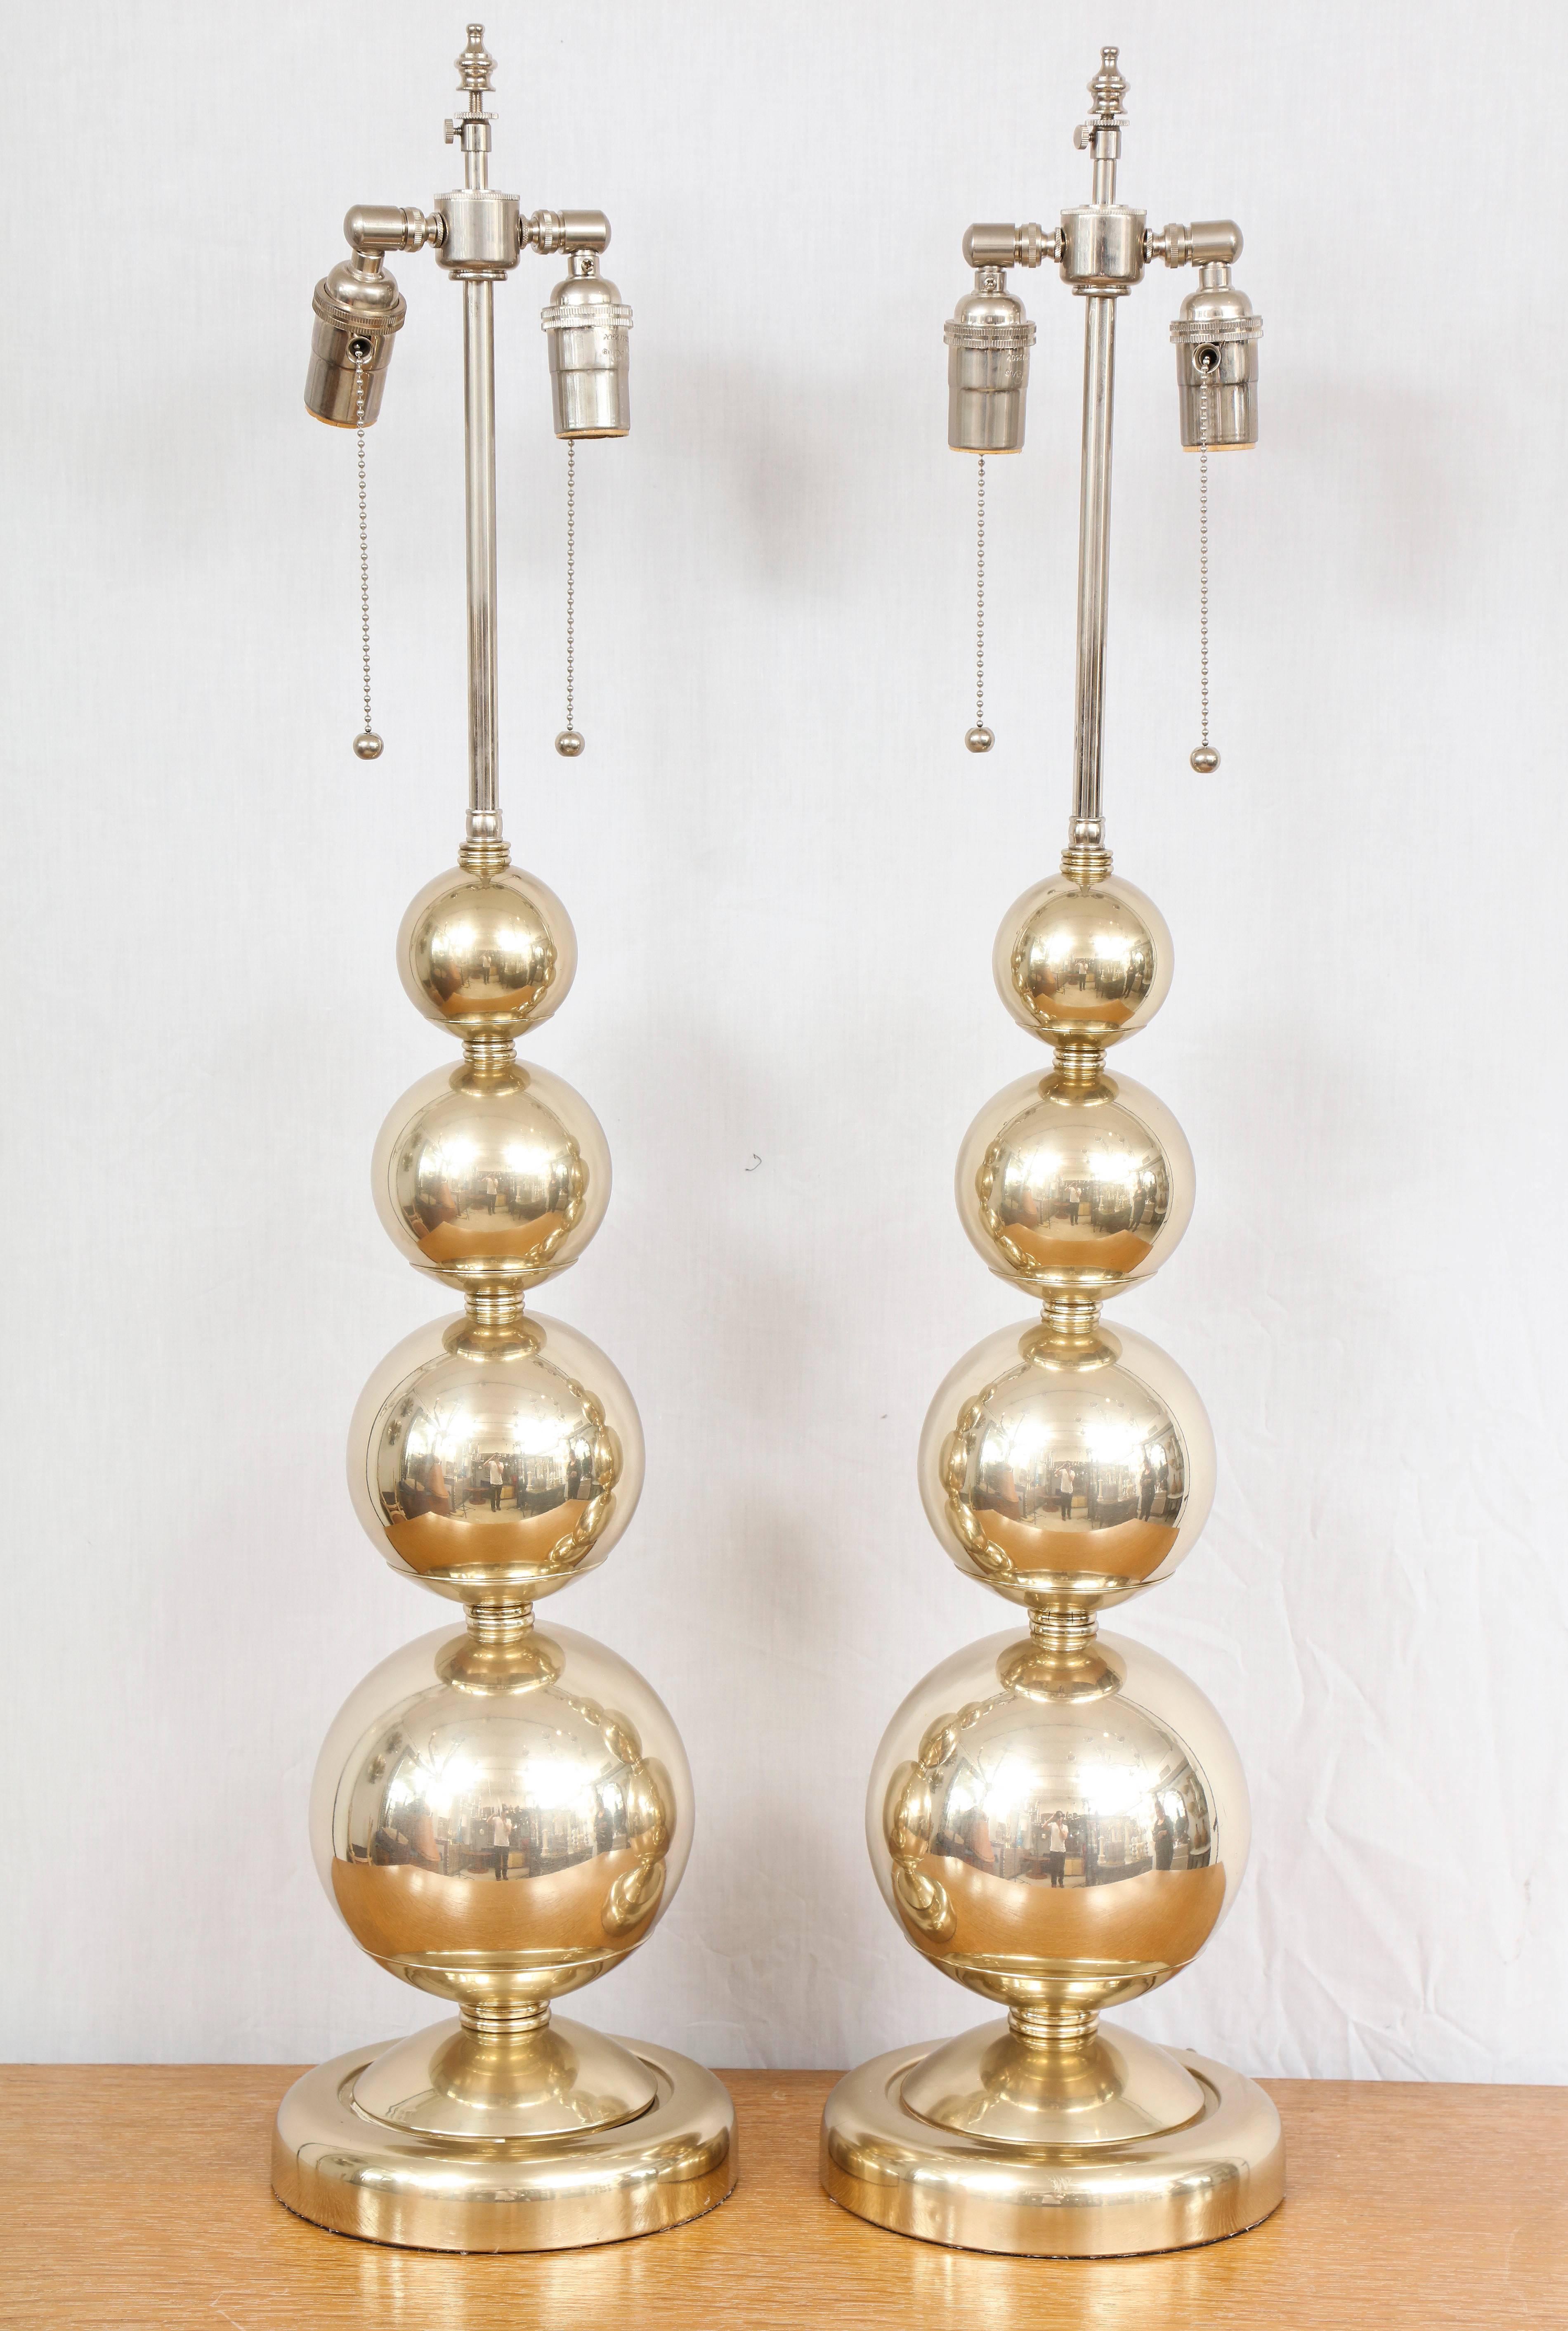 A pair of midcentury polished nickel spherical lamps.